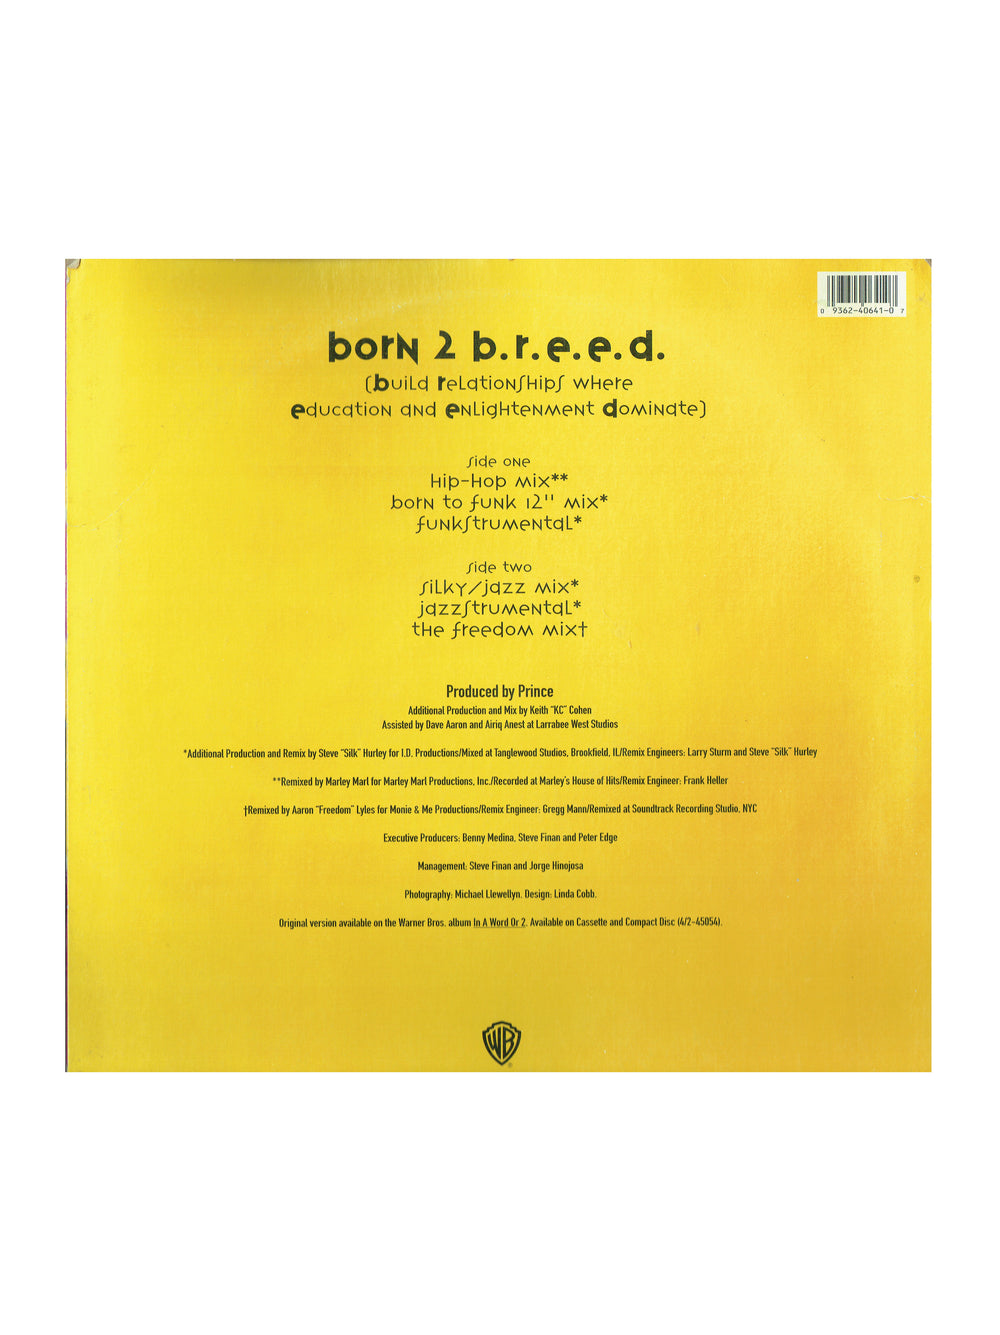 Prince – Monie Love Born 2 B.R.E.E.D Vinyl 12" Maxi Single US Preloved: 1993